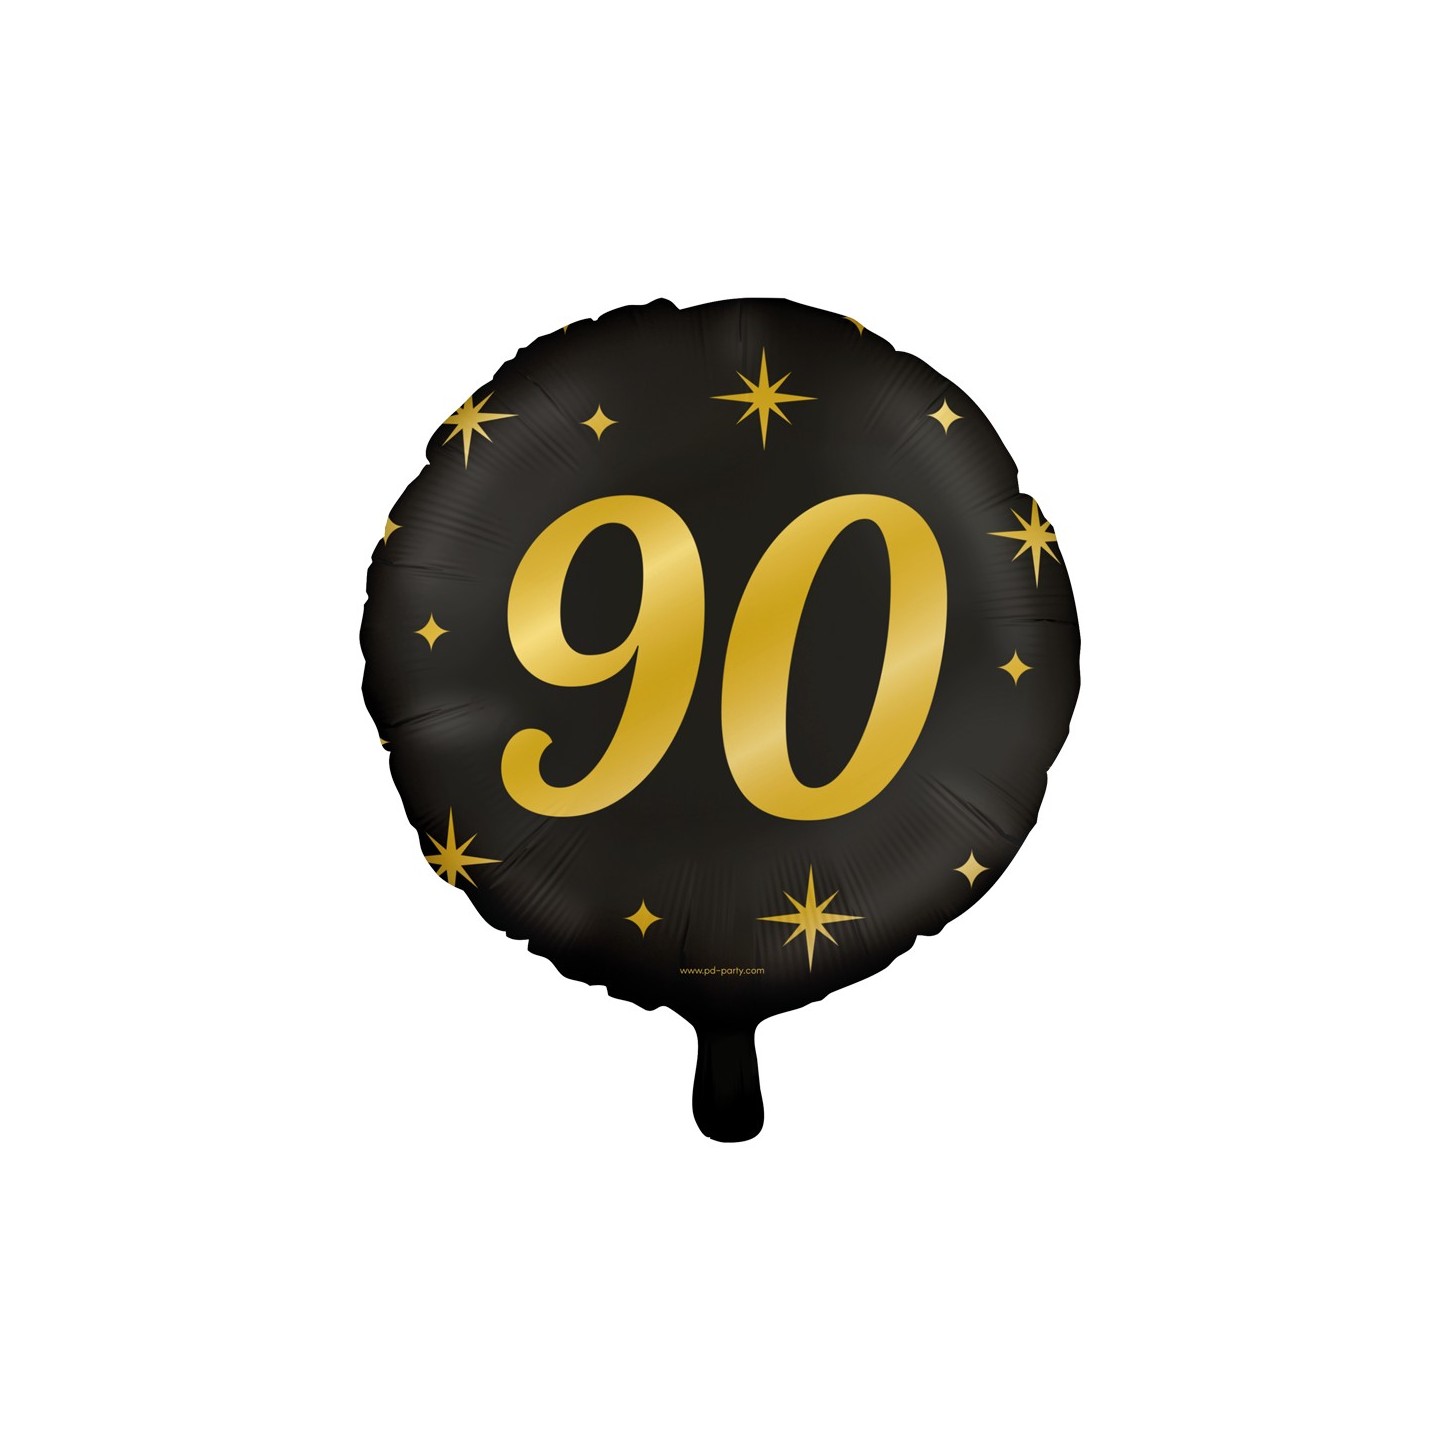 Folie ballon verjaardag versiering 90 jaar